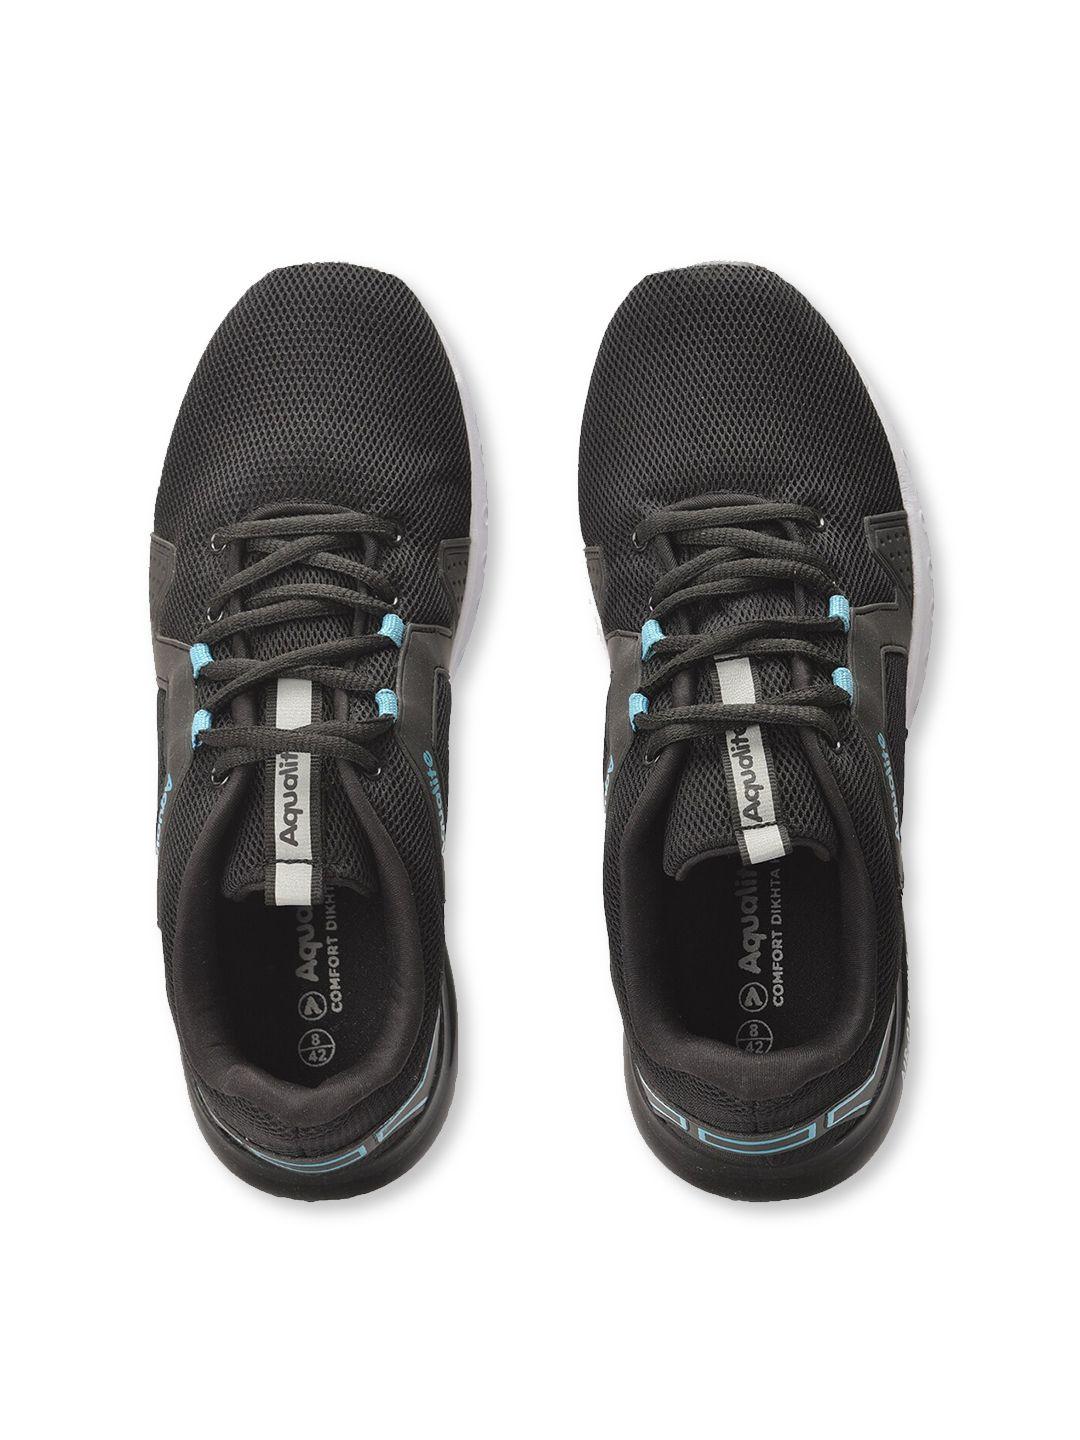 aqualite men charcoal running non-marking shoes